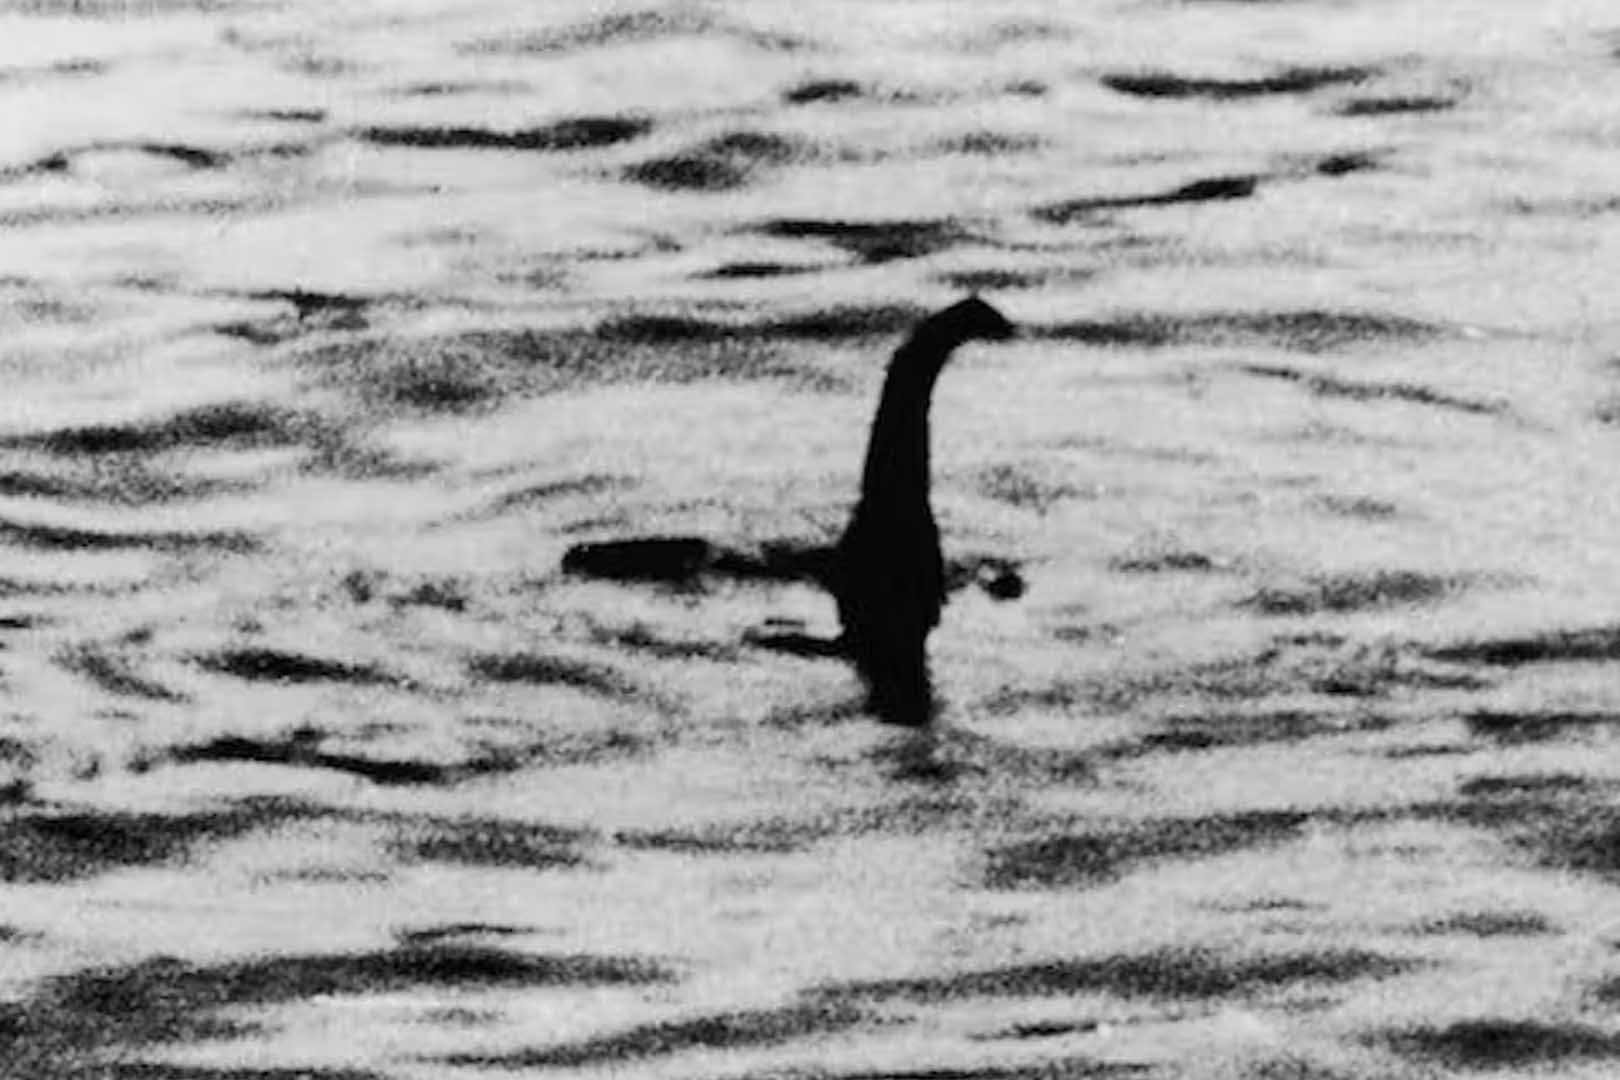 Perburuan Monster Loch Ness Nessie, Nyata Atau Mitos?